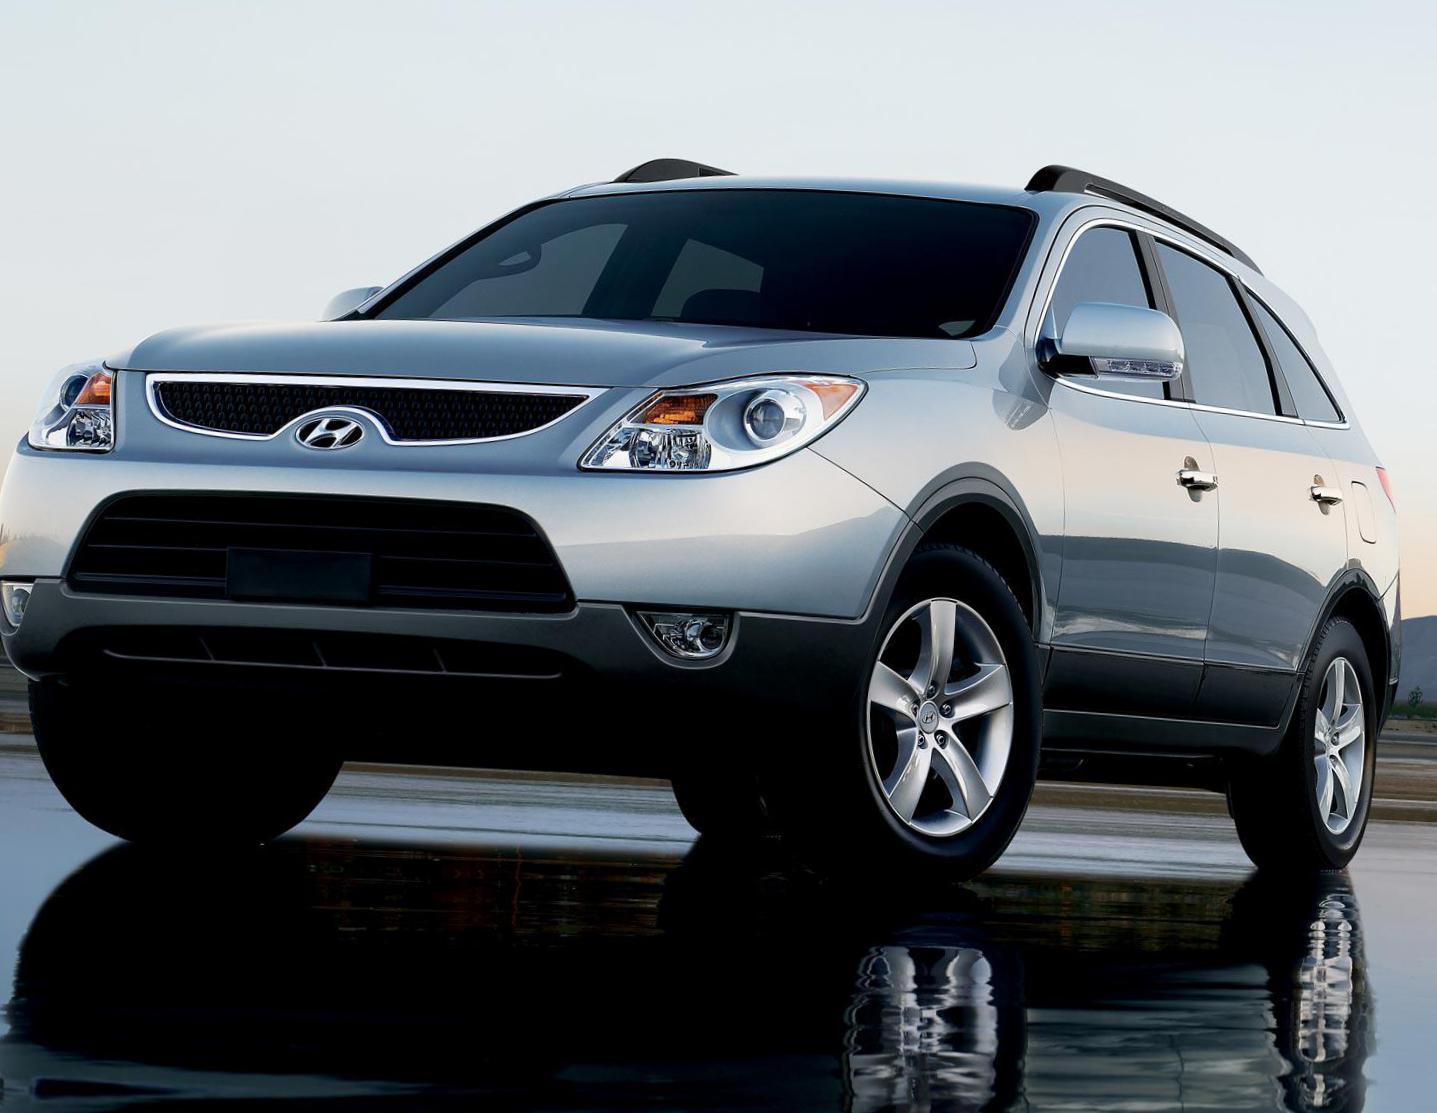 ix55 (Veracruz) Hyundai review 2012